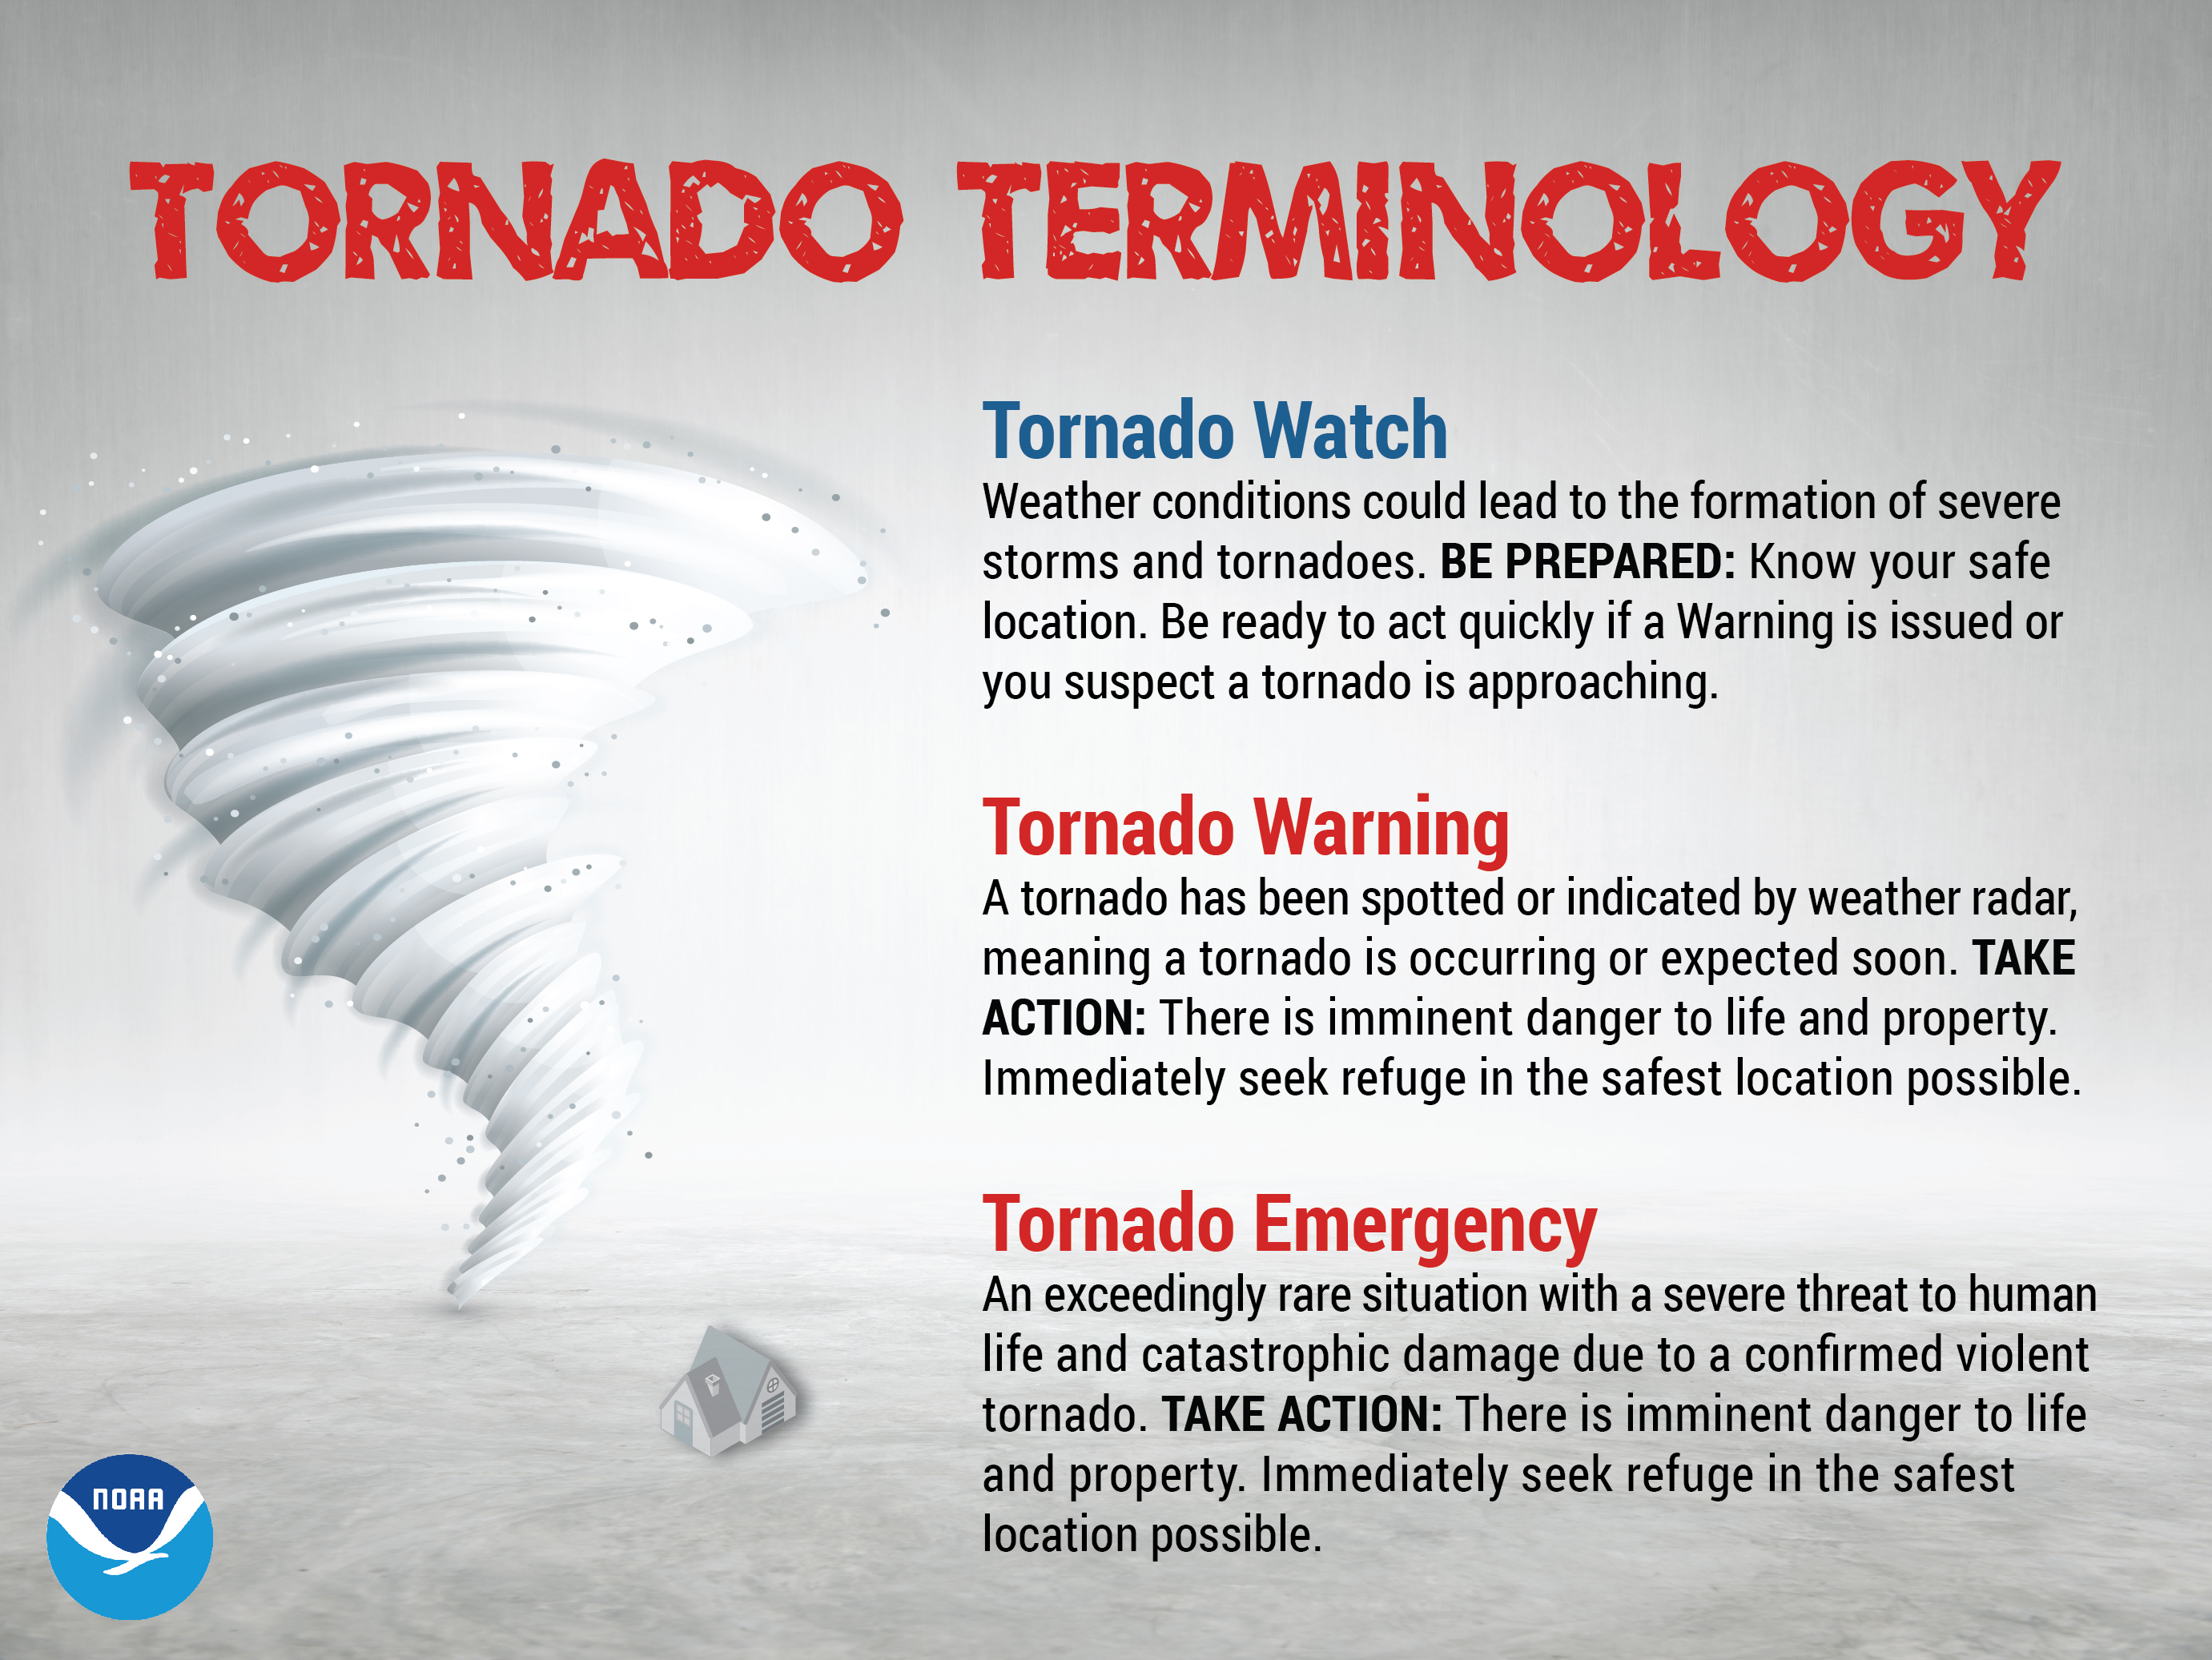 Tornado Watch and Warning Information